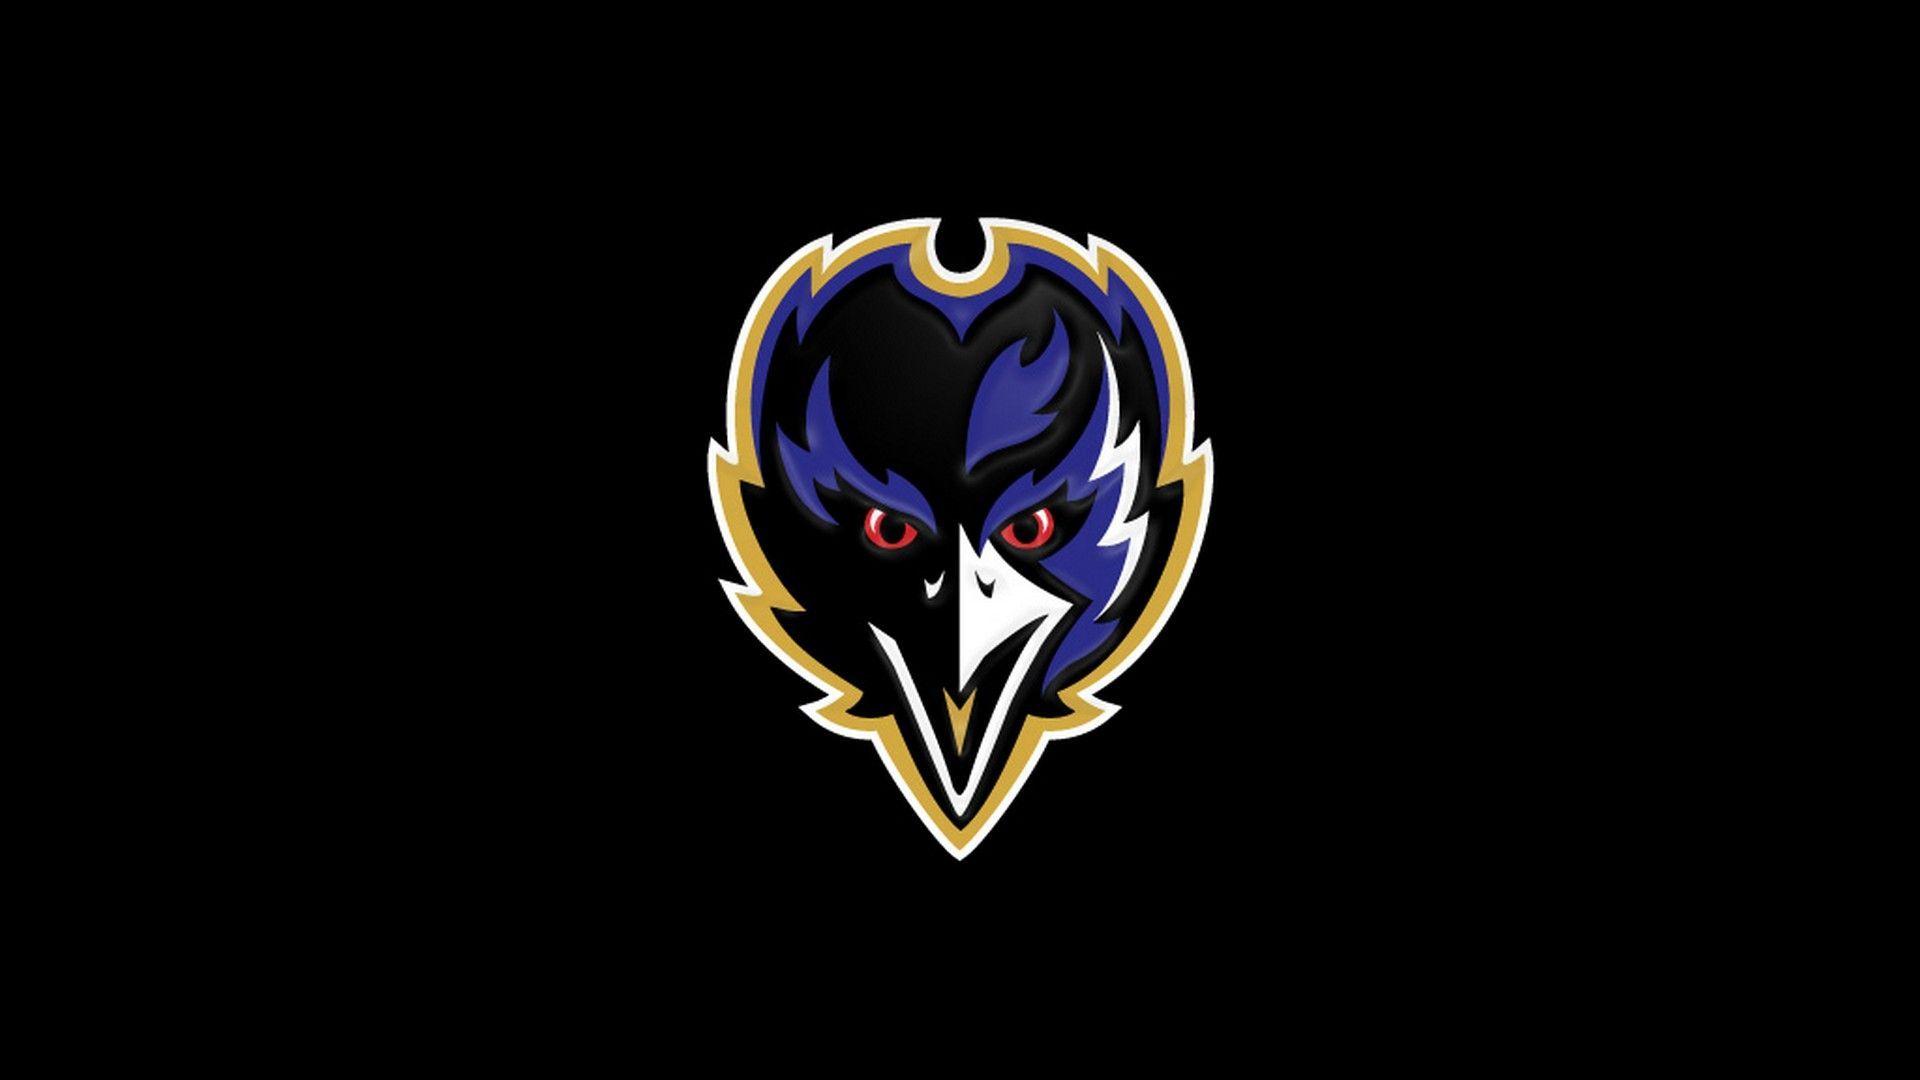 Baltimore Ravens Mac Background. Mac background, Ravens